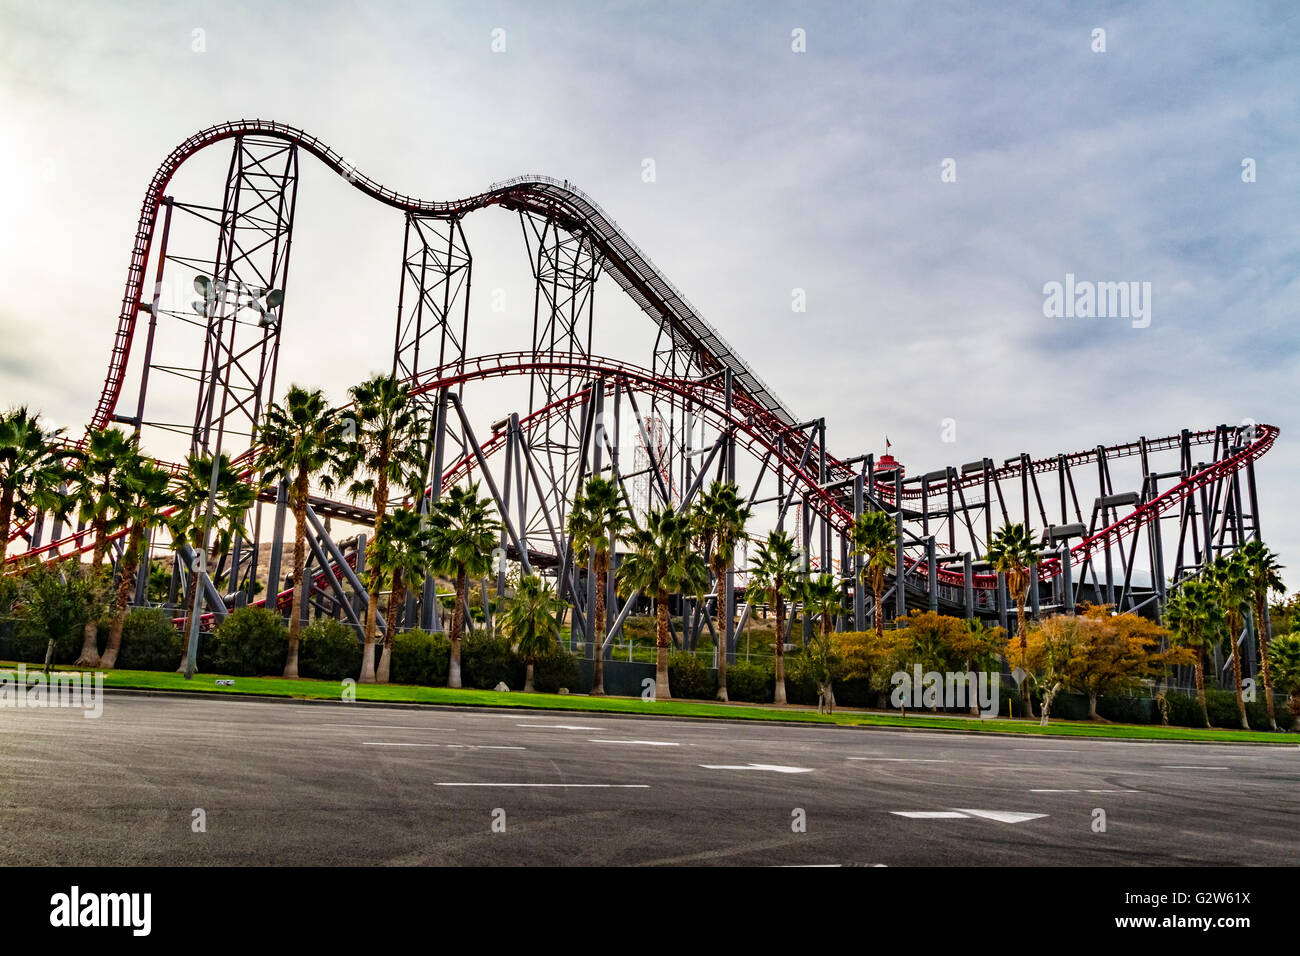 The X2 Roller Coaster at Six Flags Magic Mountain in Santa Clarita  California Stock Photo - Alamy